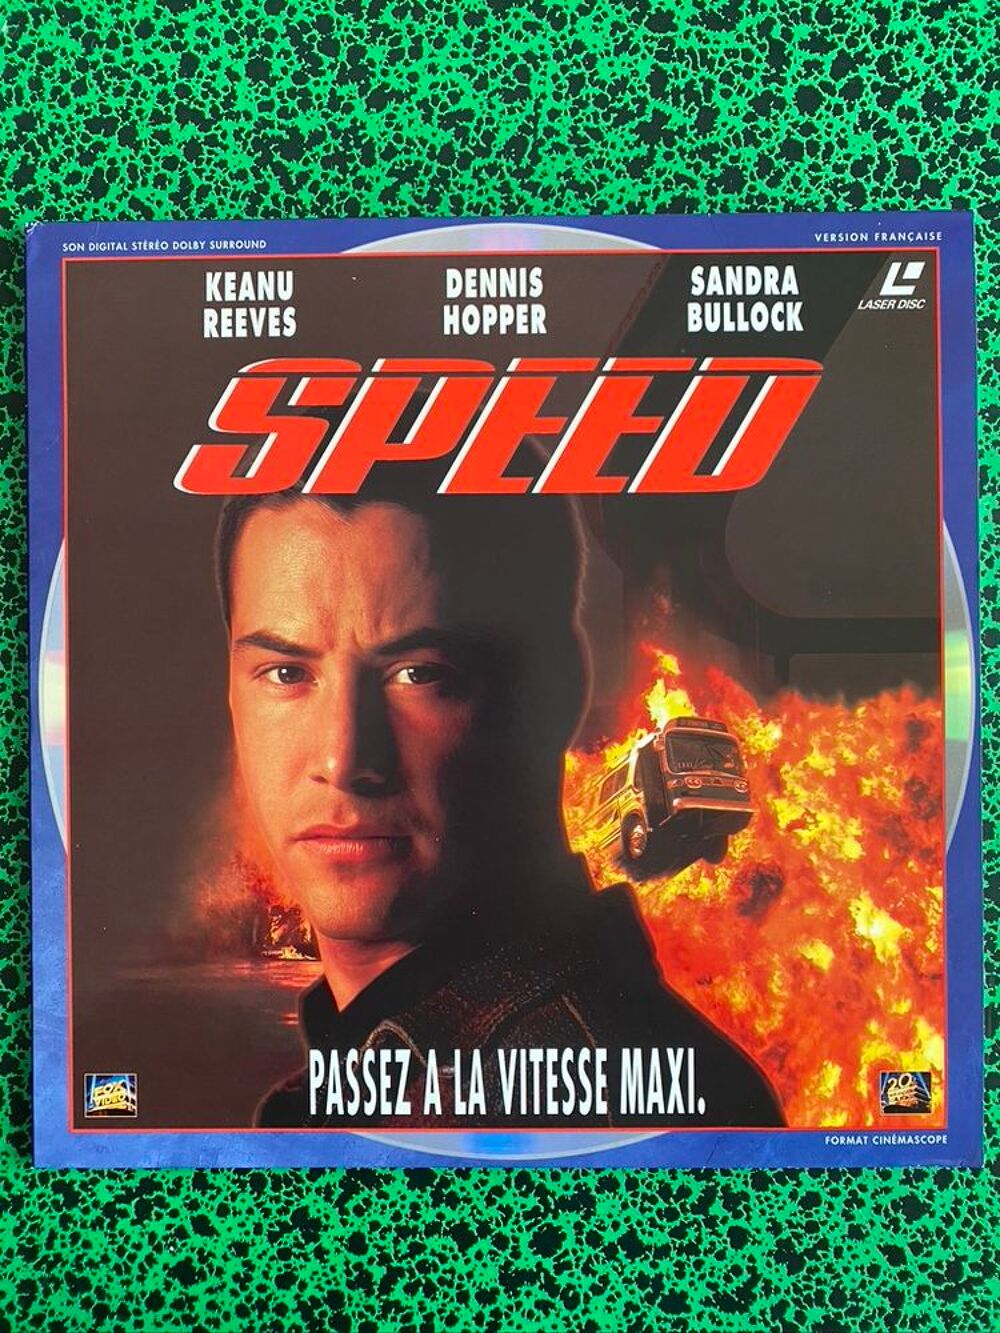 SPEED _Keanu Reeves_Dennis Hopper_Sandra Bullock_ Laserdic DVD et blu-ray